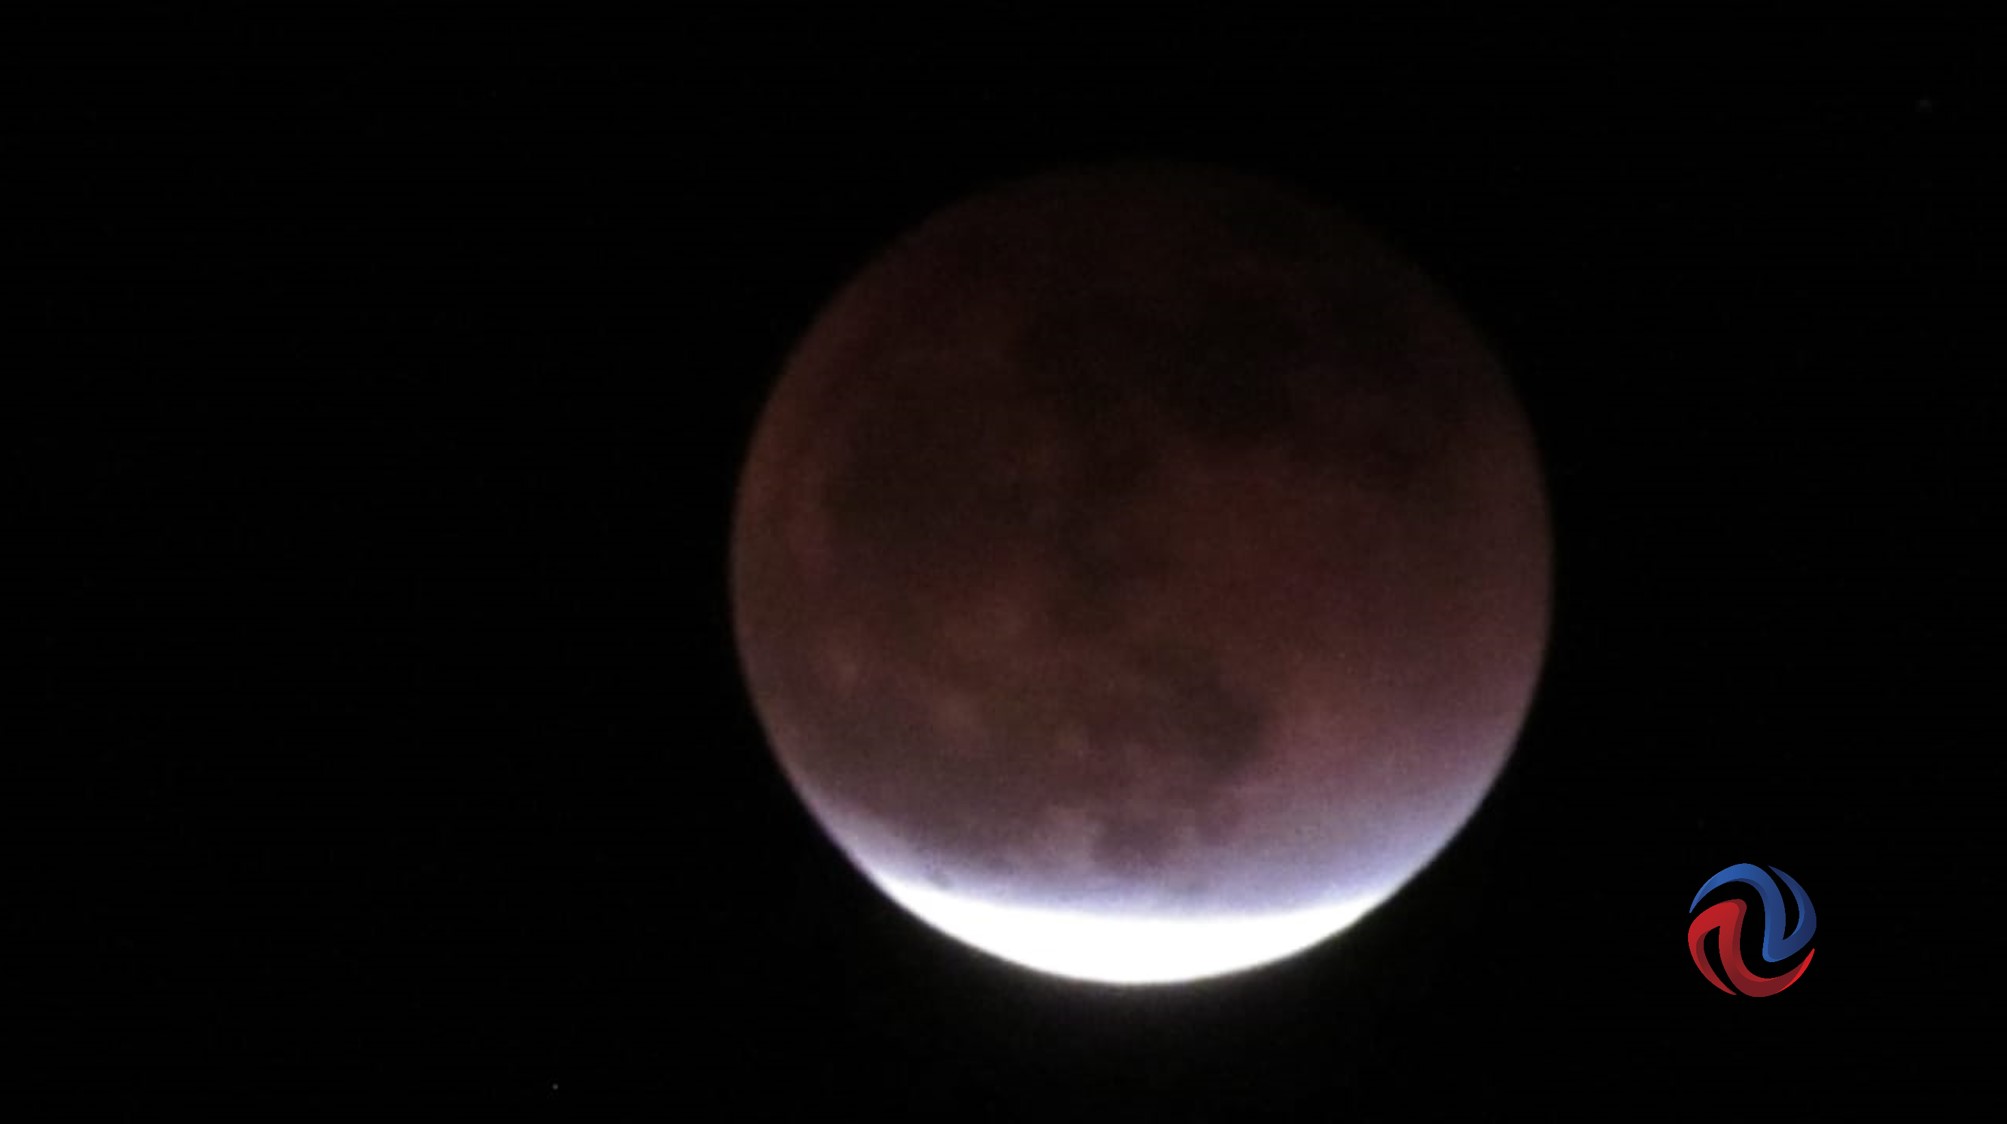 Ocurre eclipse total de luna en el cielo de Tijuana